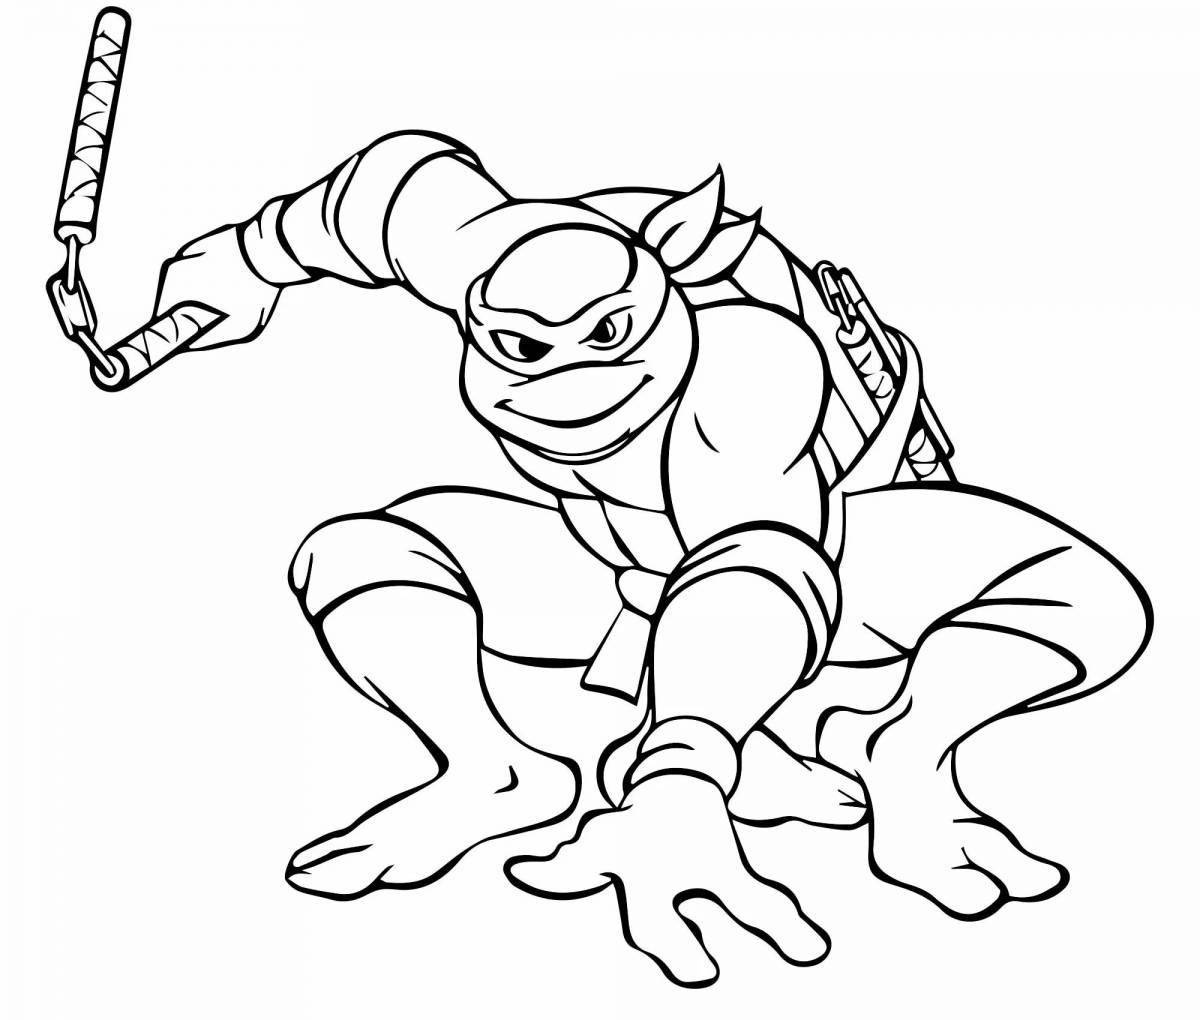 Ninja Turtles playful coloring page